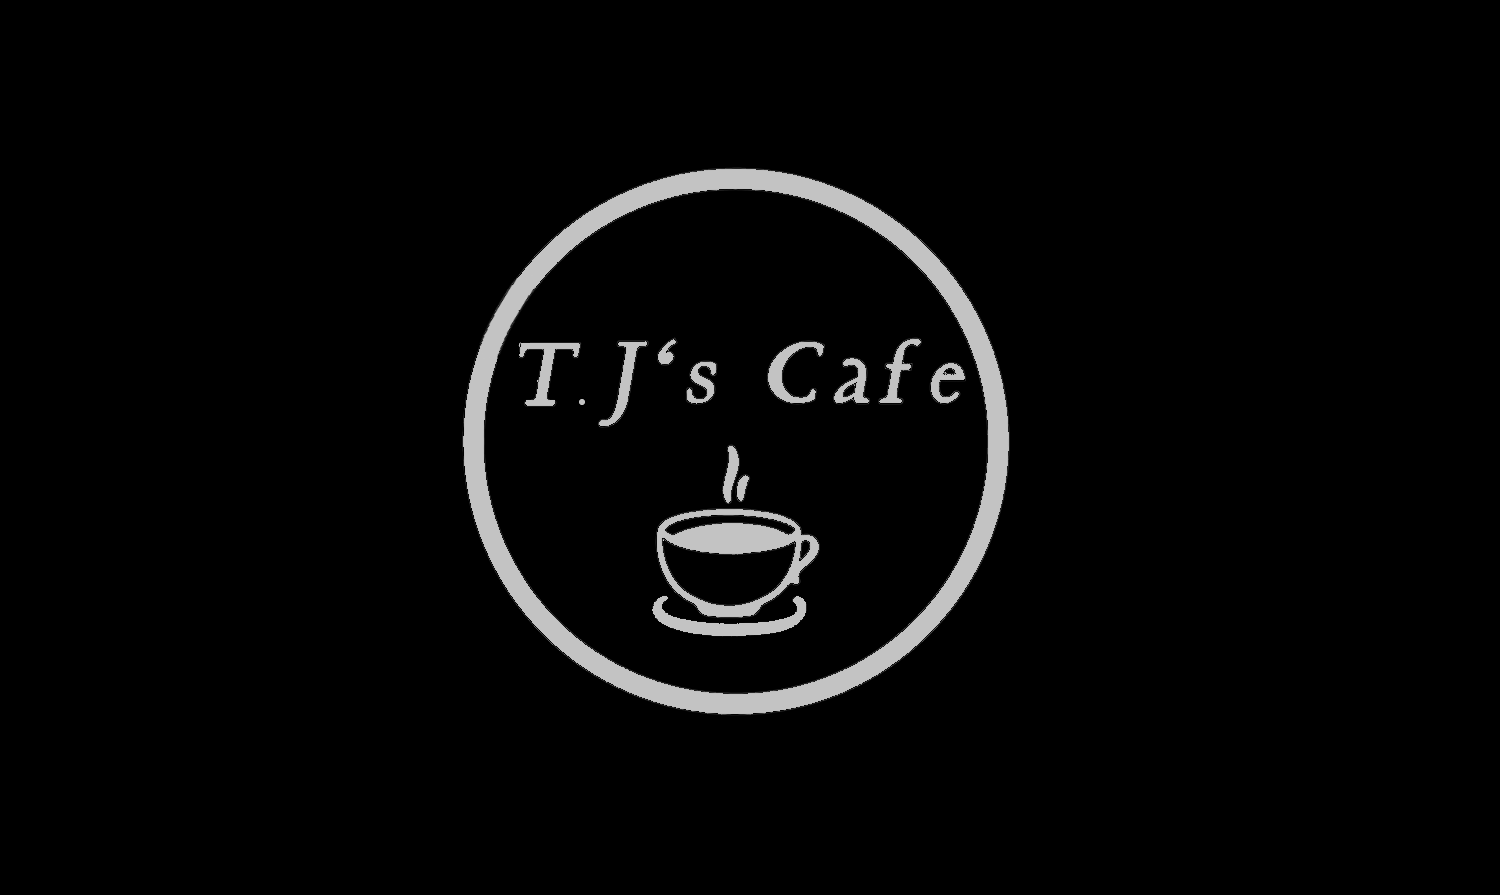 corporate-partner-logo-tjs-cafe